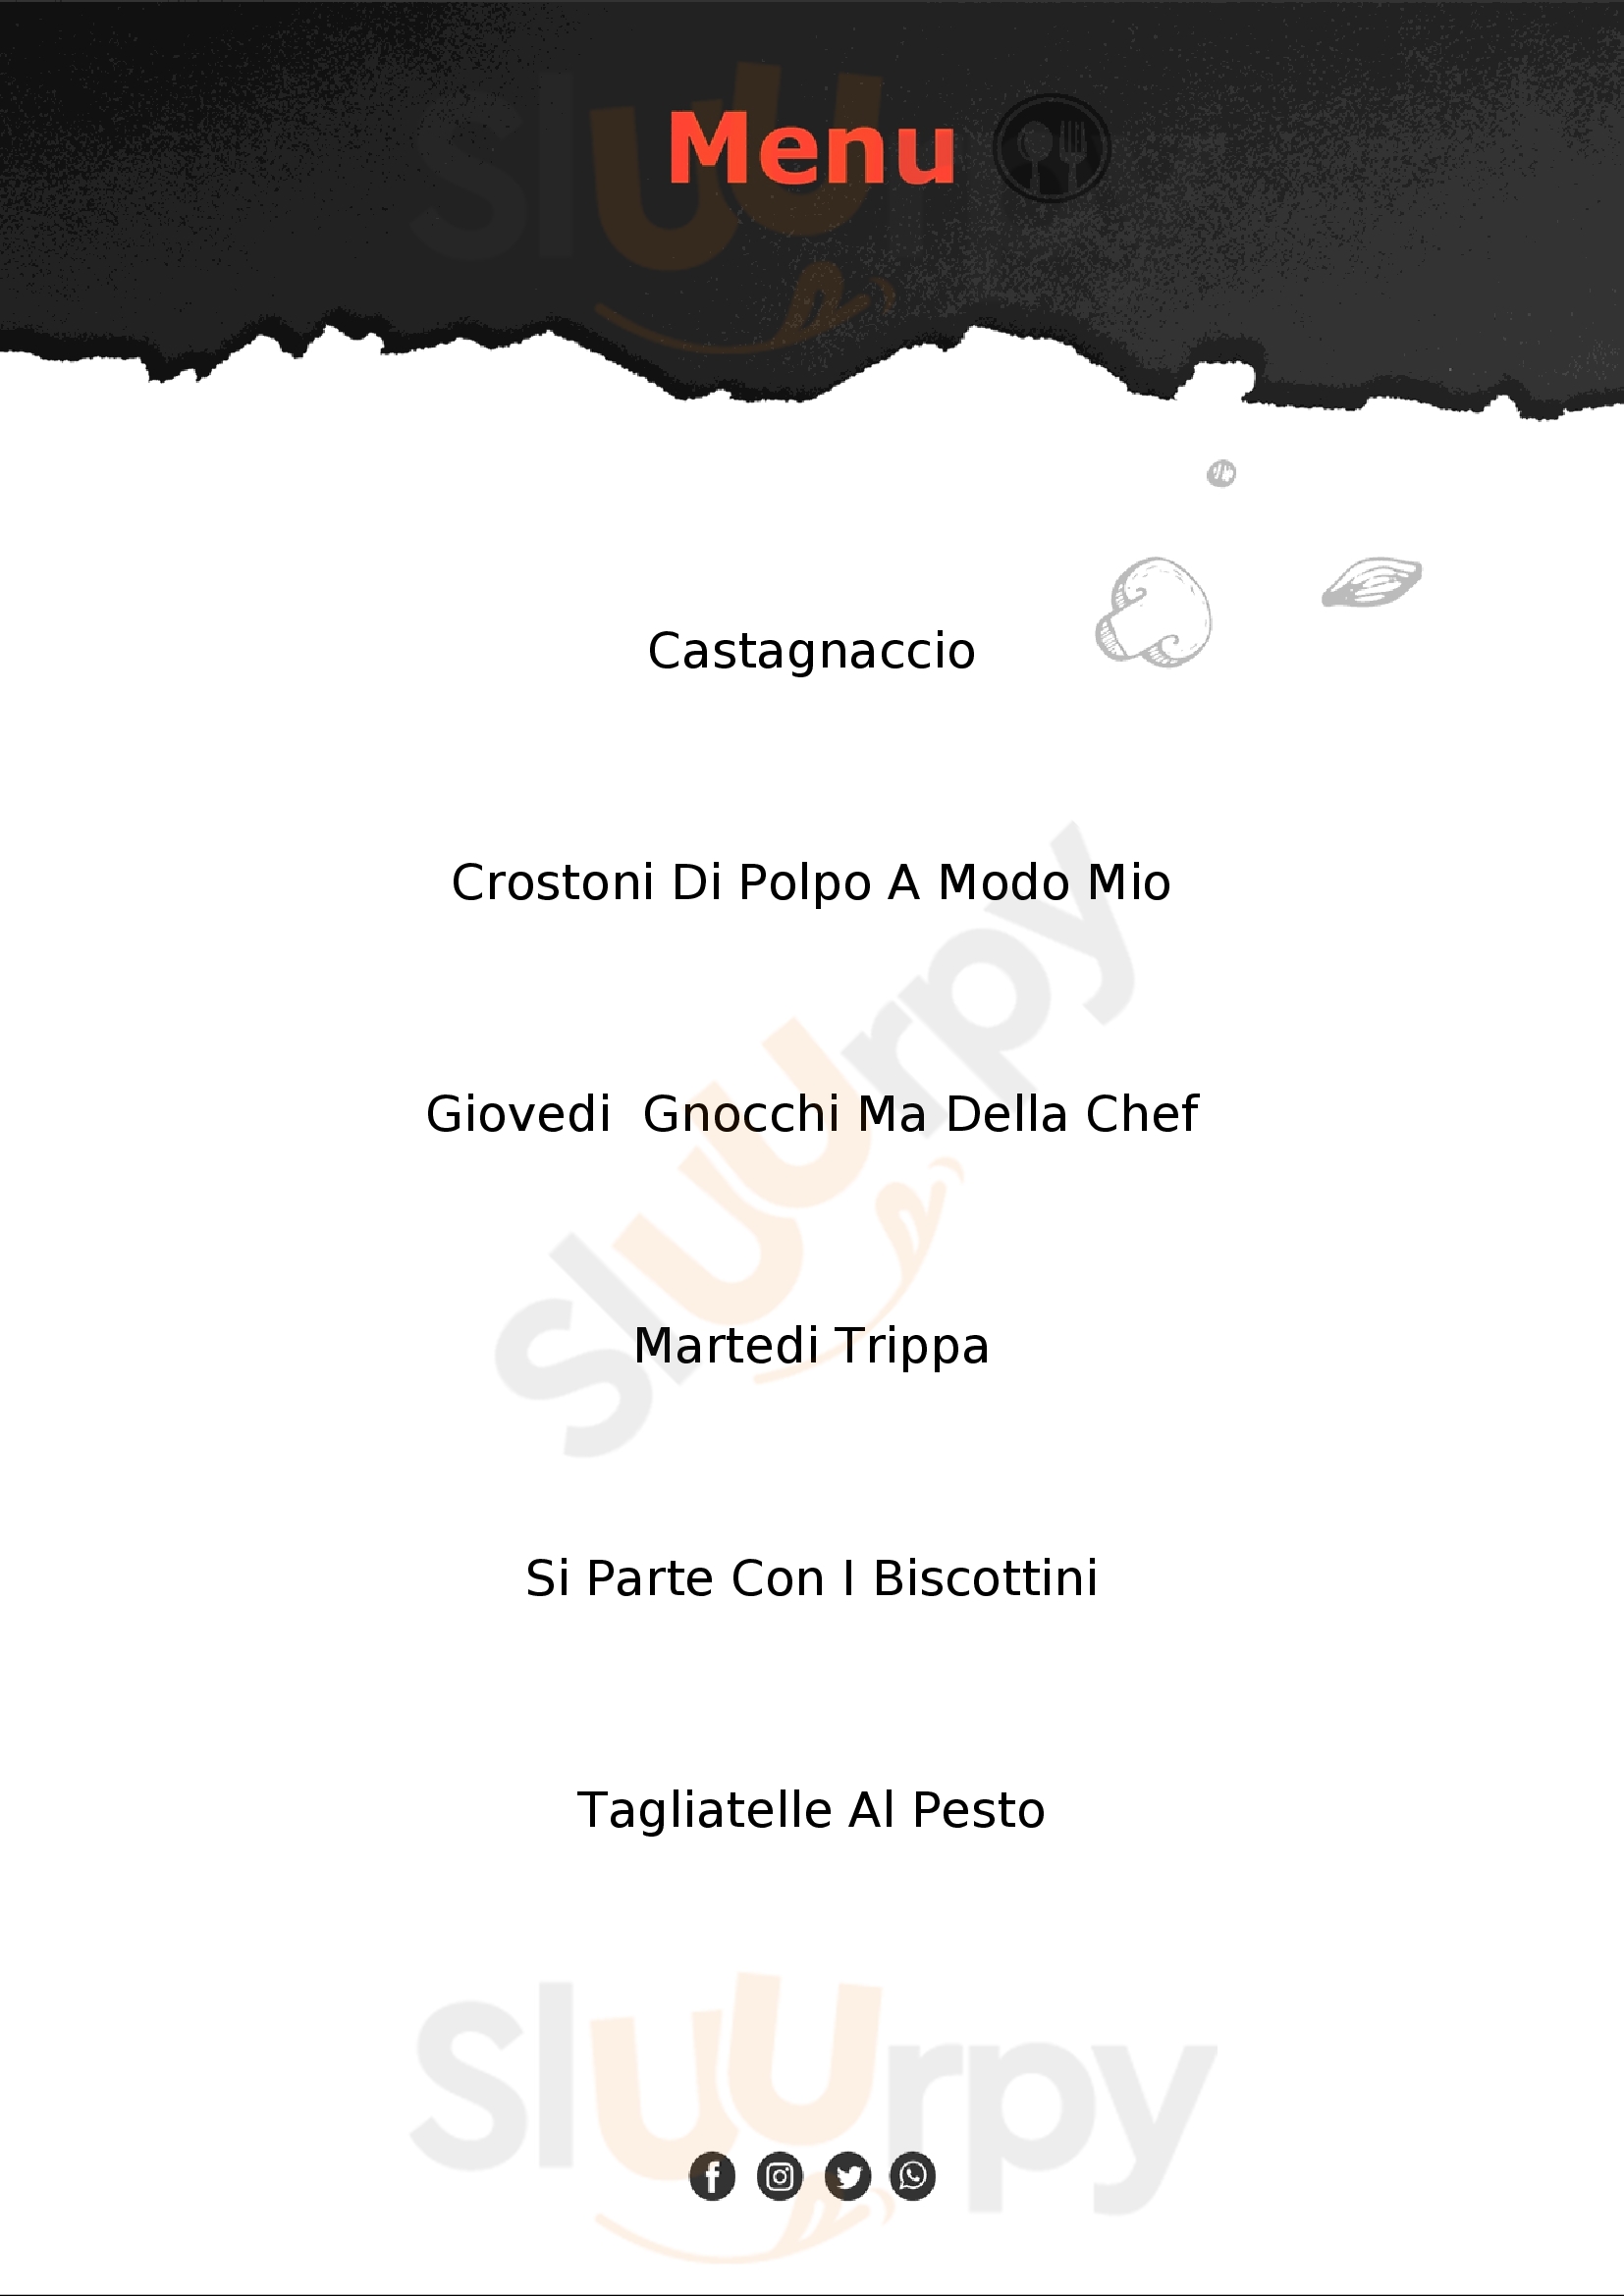 Home Restaurant - Cucina Casalinga KM 0, Prodotti Colti e Mangiati Pisa menù 1 pagina